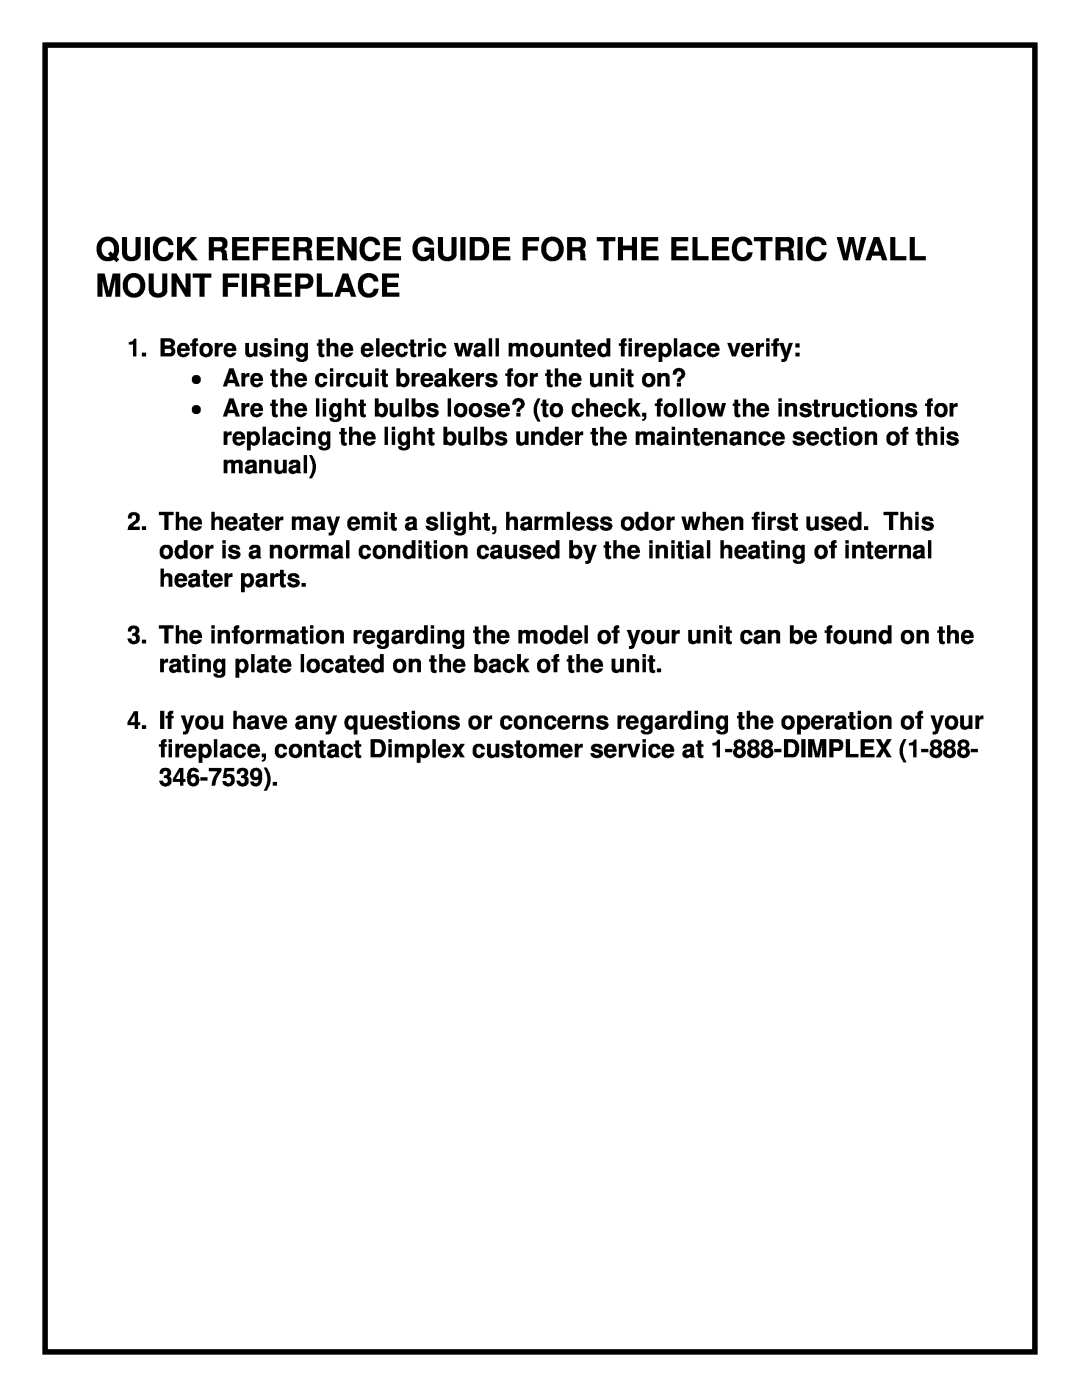 Dimplex EWM-SS-BLK, EWM-COPPER manual •Are the circuit breakers for the unit on? 